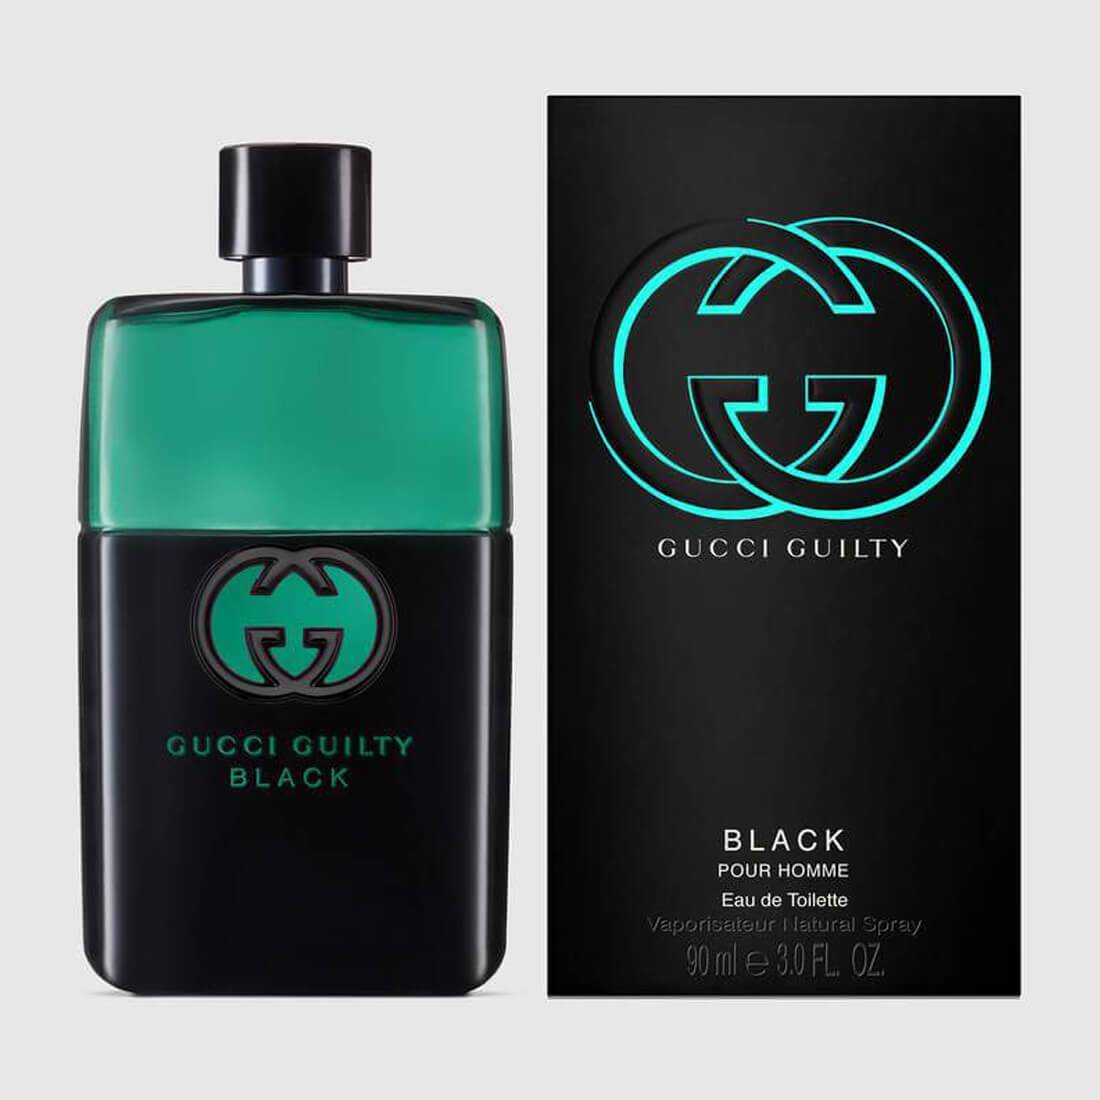 Gucci Guilty Black Pour Homme Perfume For Men - 90ml